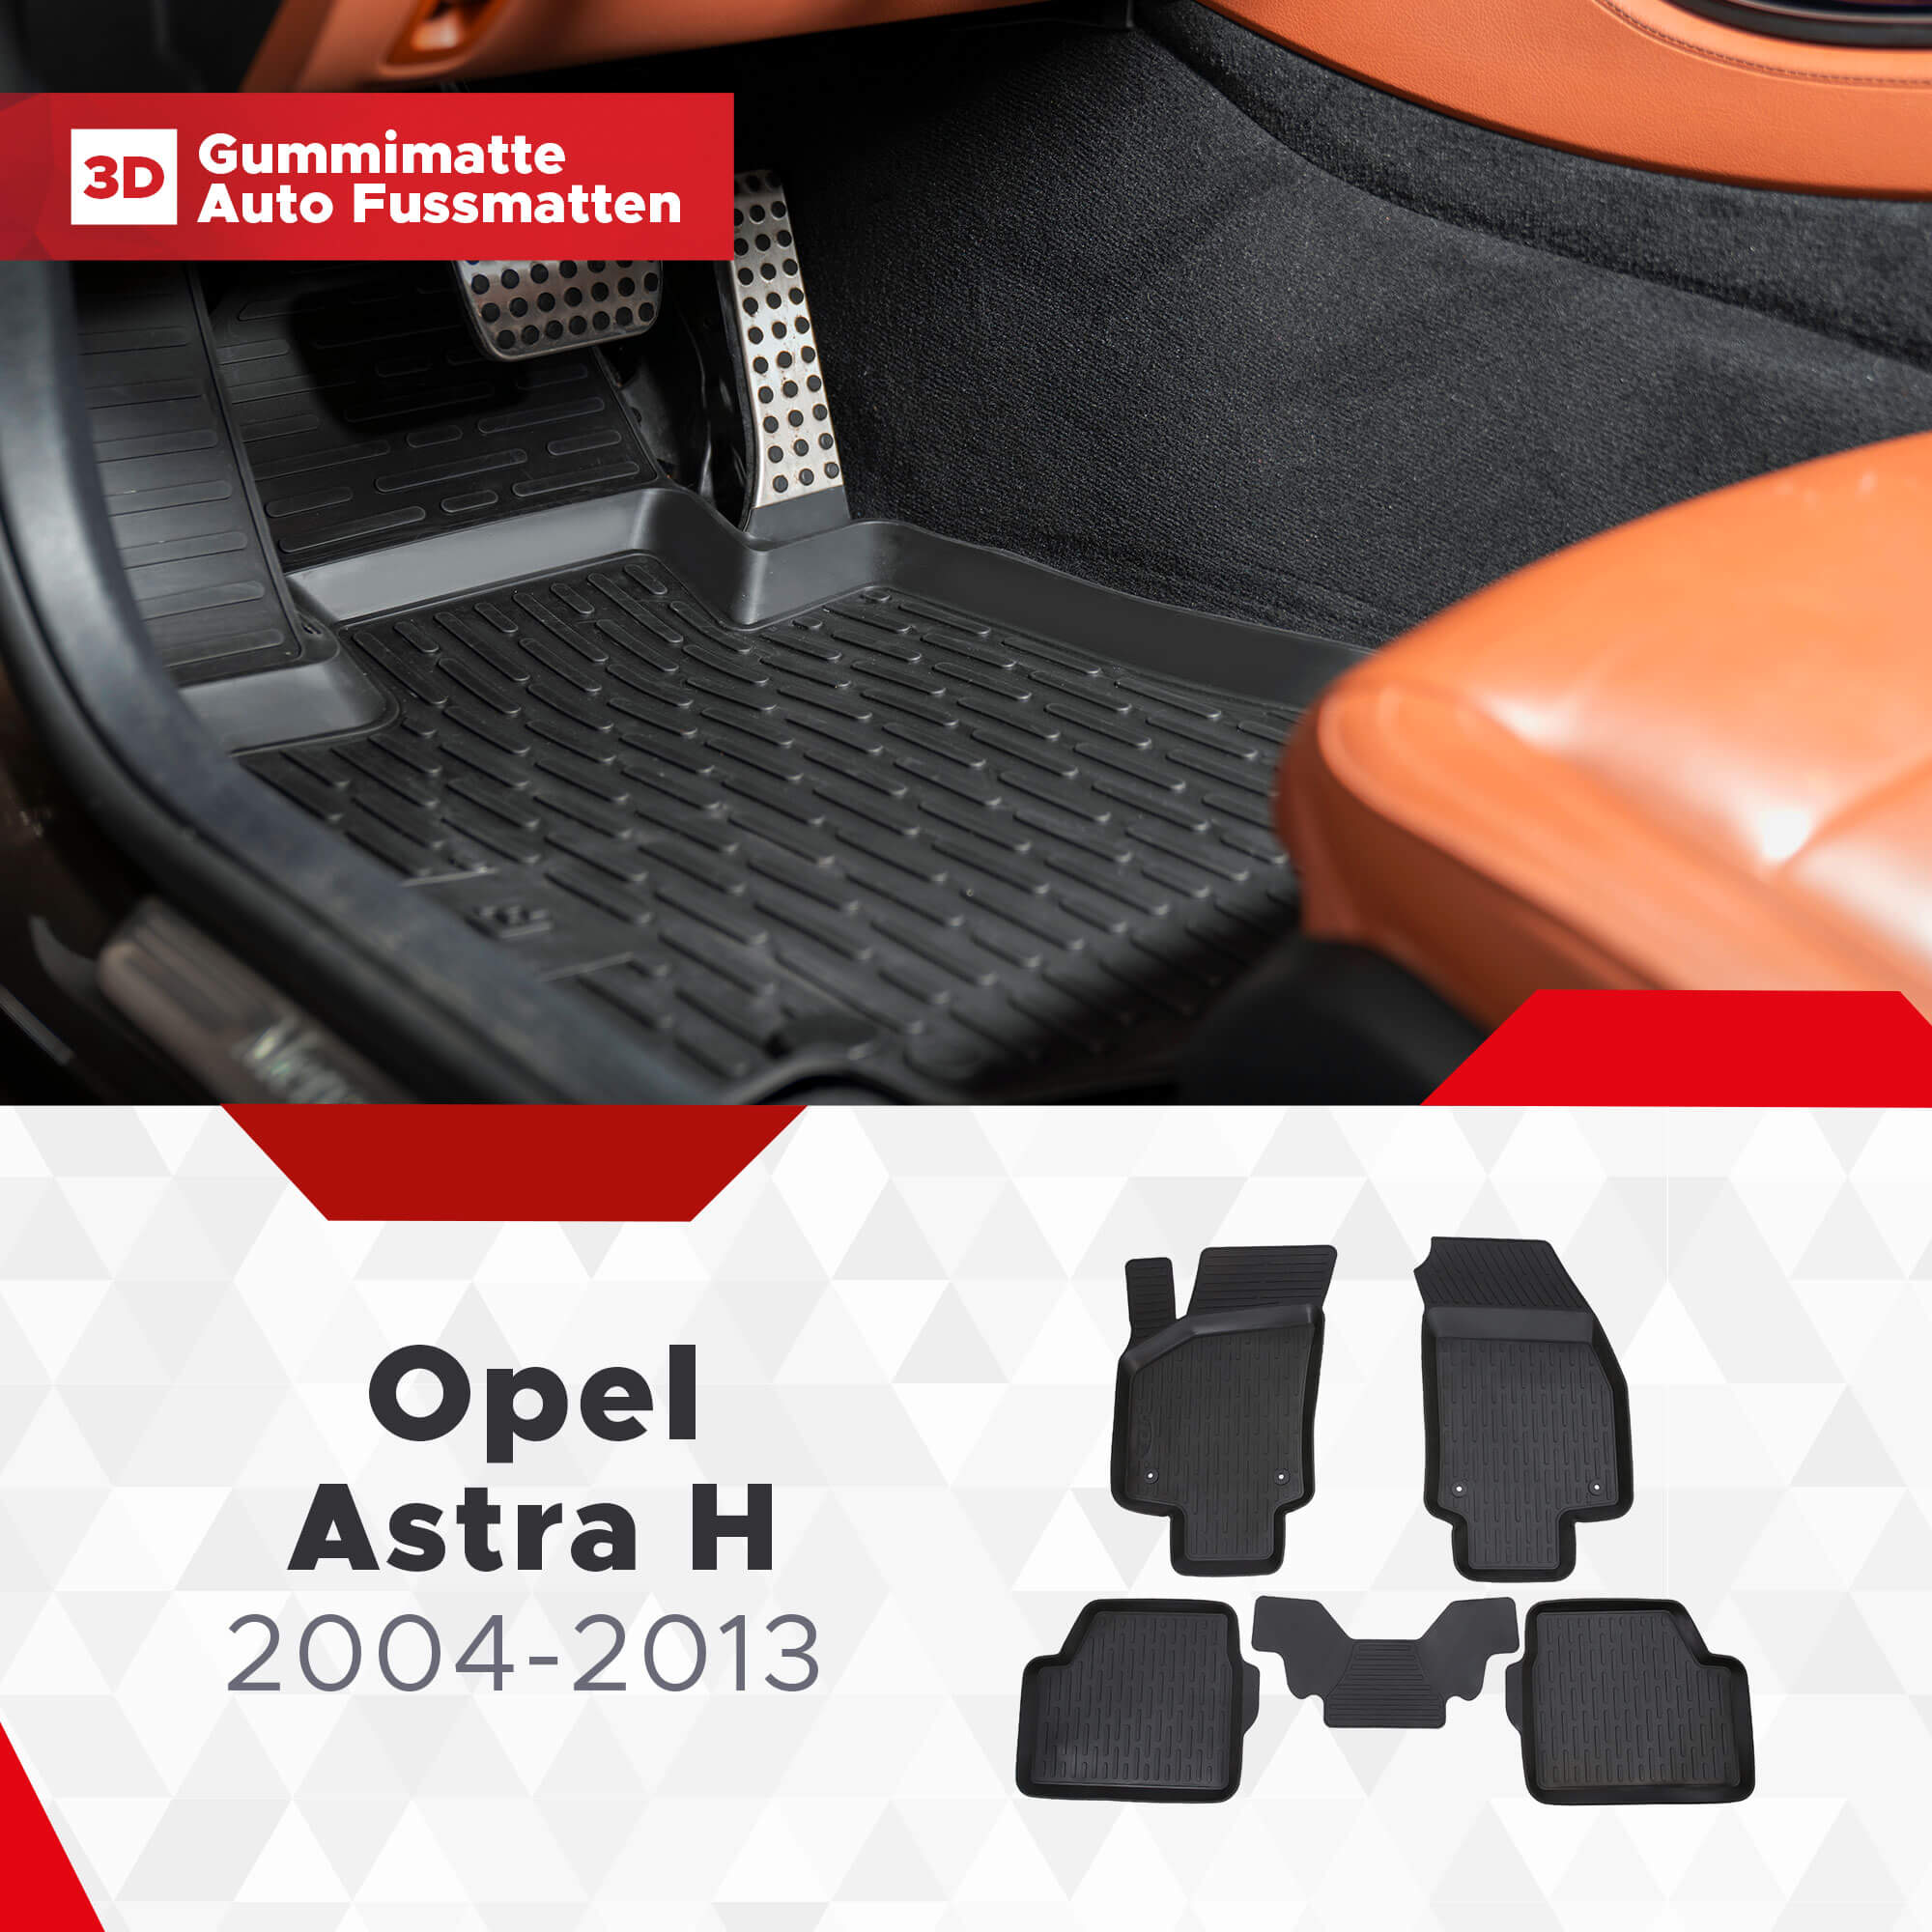 2004 H 3D 2013 Fussmatten passend für - Astra Opel